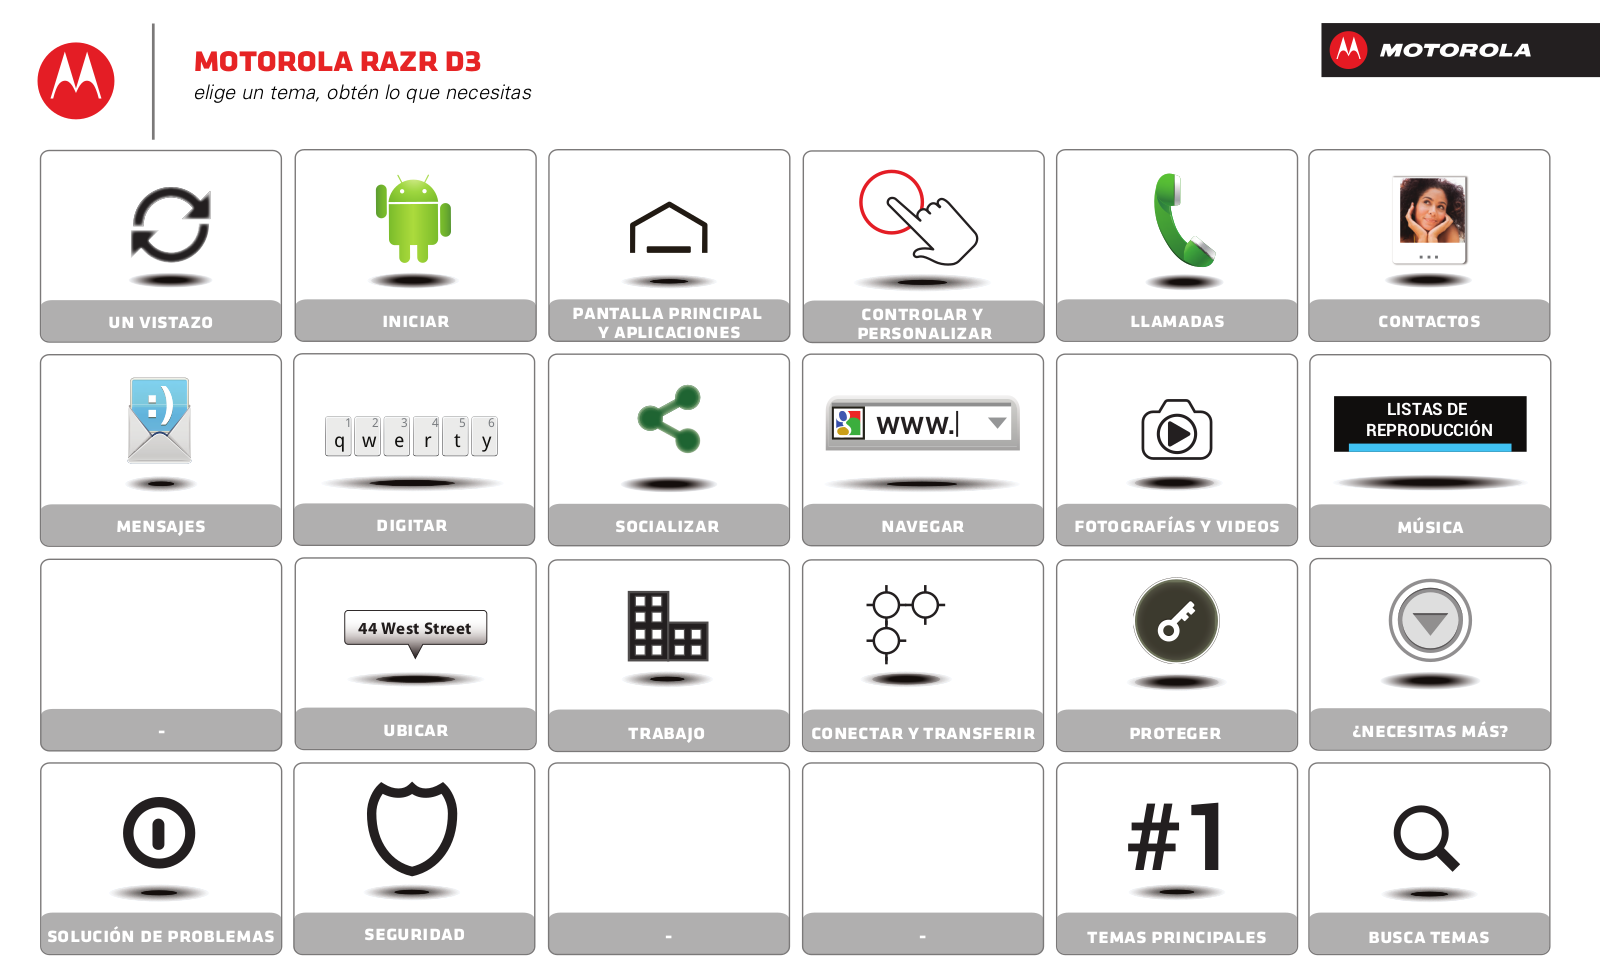 Motorola RAZR D3 Instruction Manual